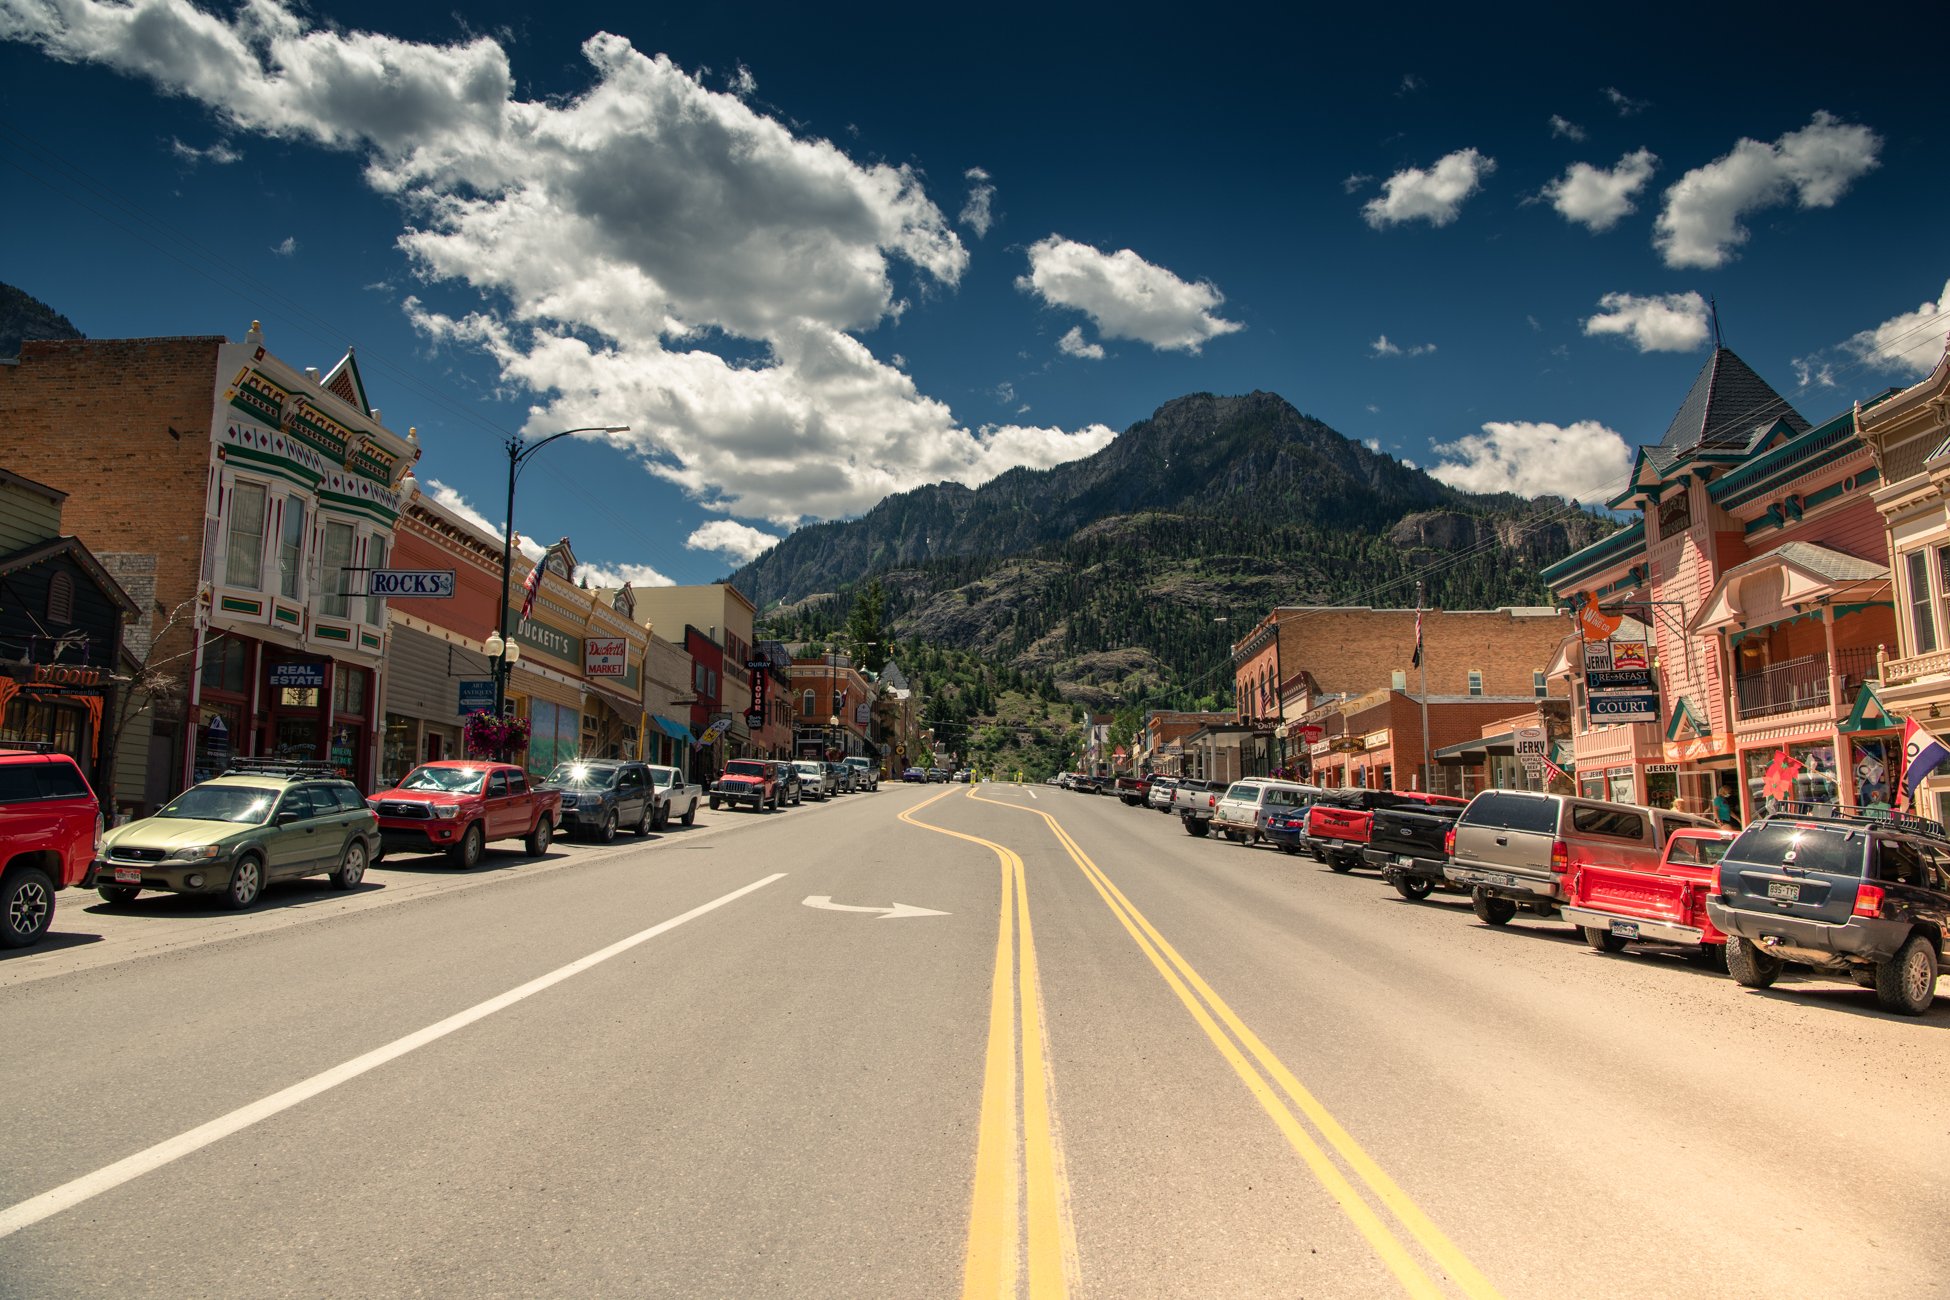 Main Street in Ouray, Colorado